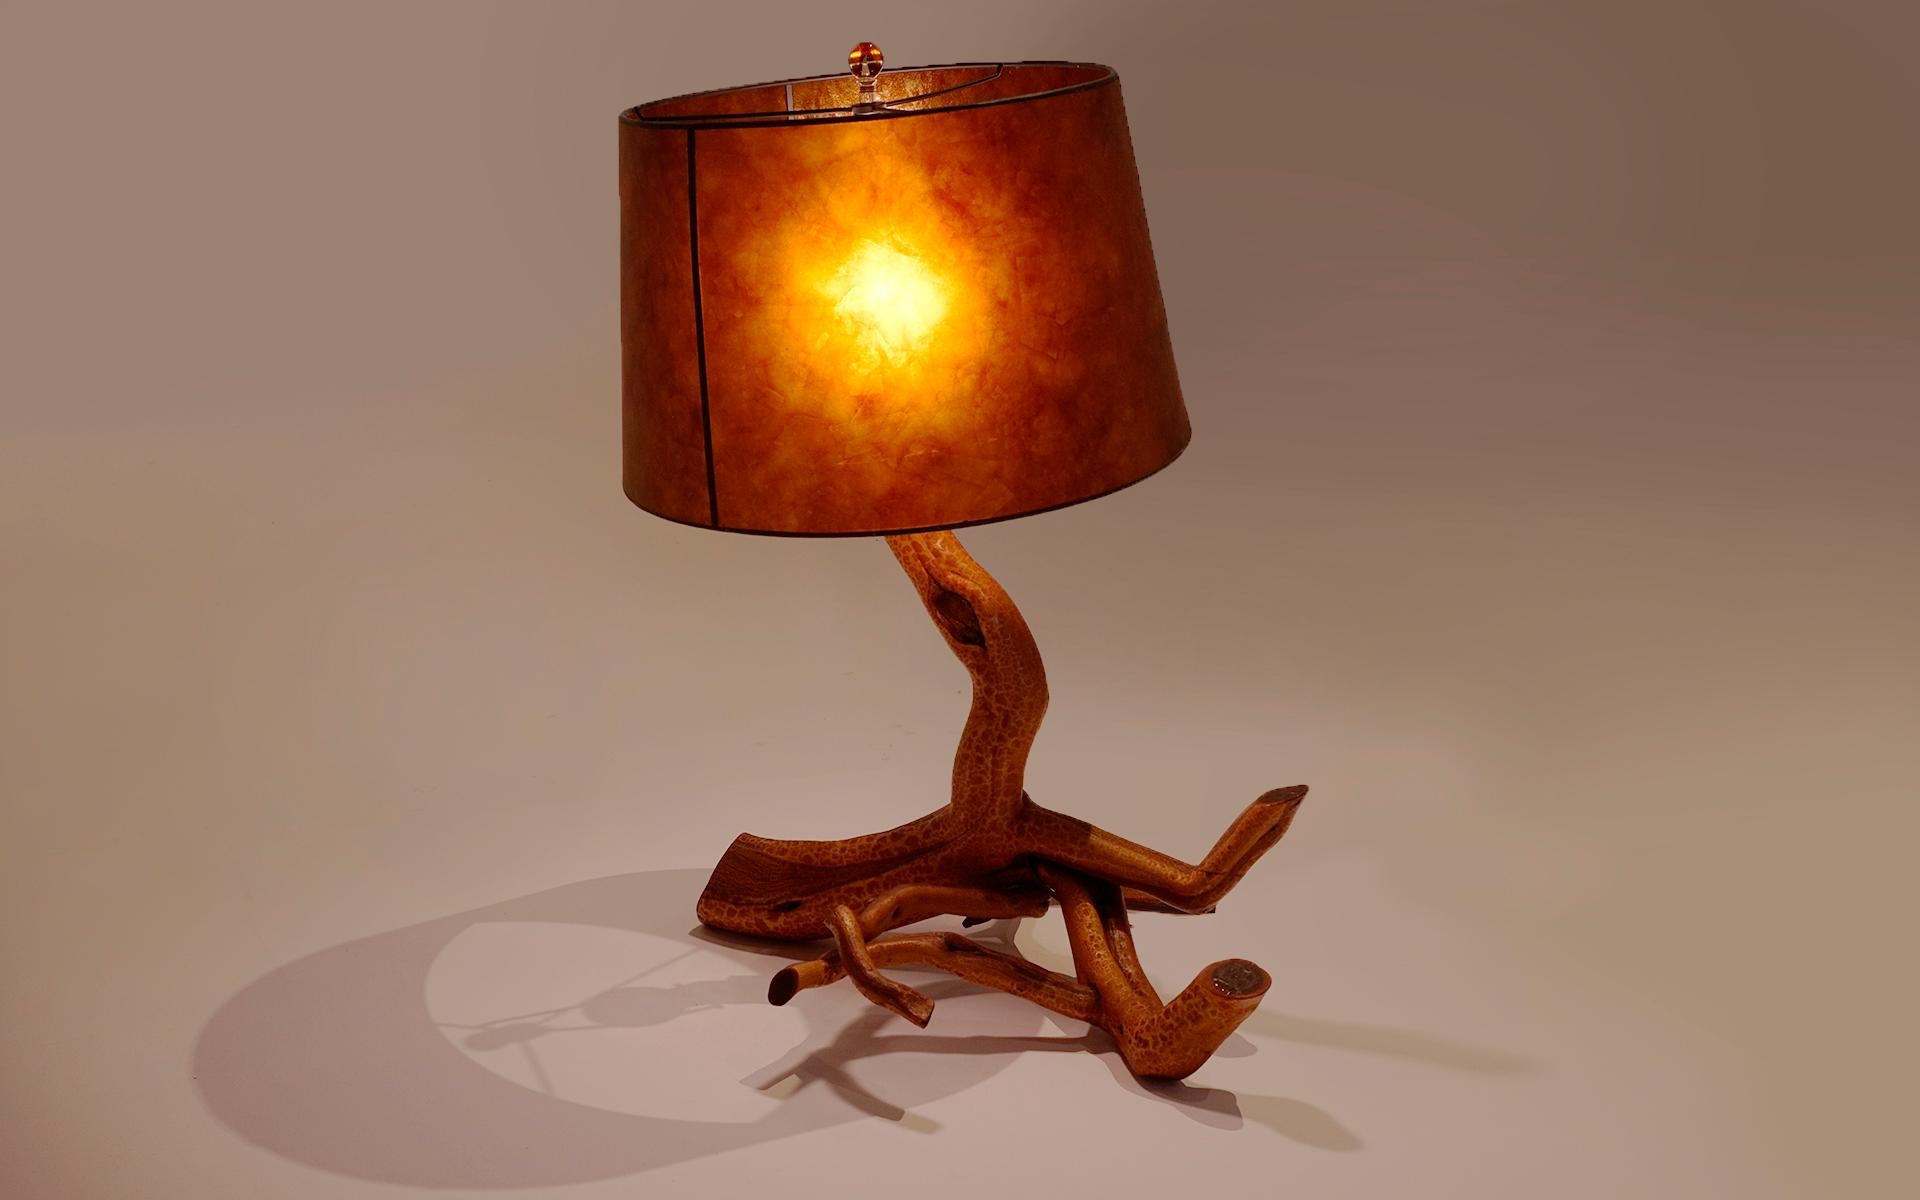 Driftwood Table Lamp with Mica Shade, Beautiful Patina, See Photos 1